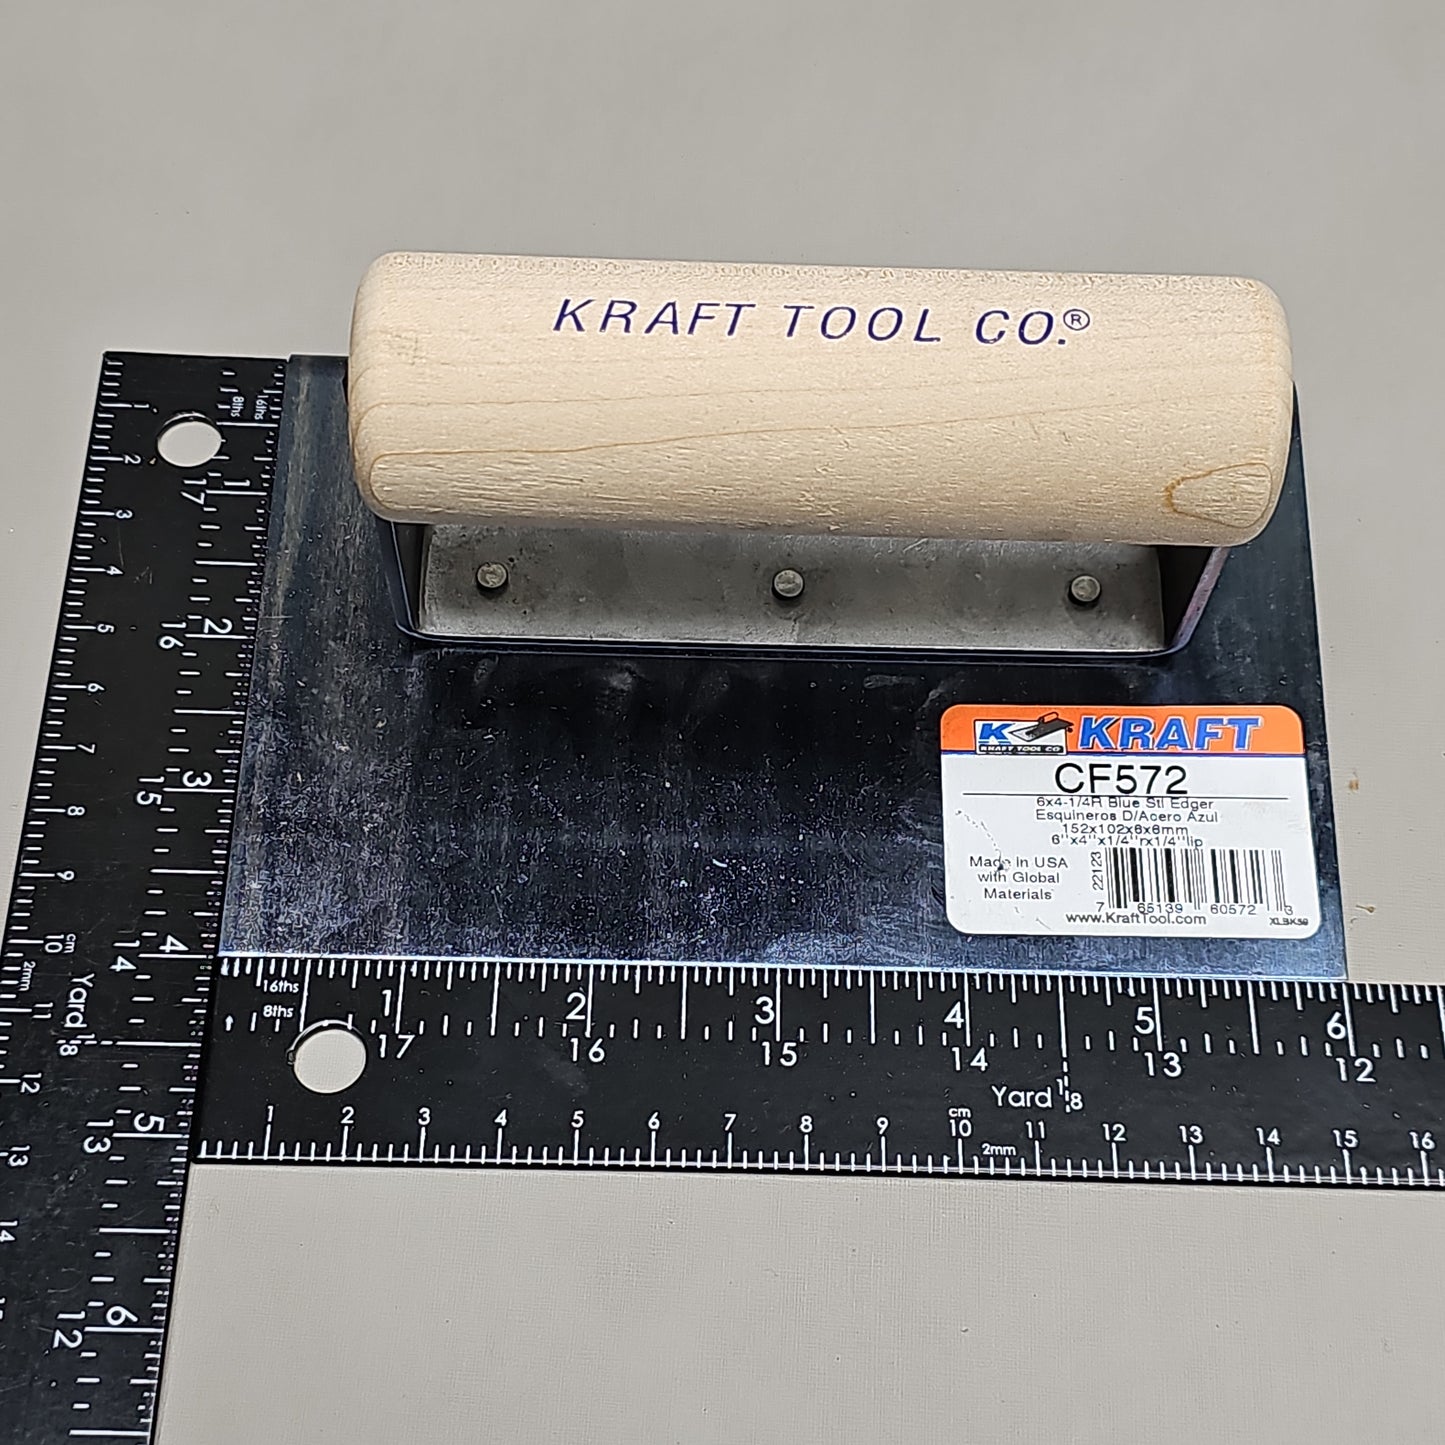 KRAFT TOOL CO Blue Steel Edger with Wood Handle 6" x 4" 1/4"R CF572 (New)